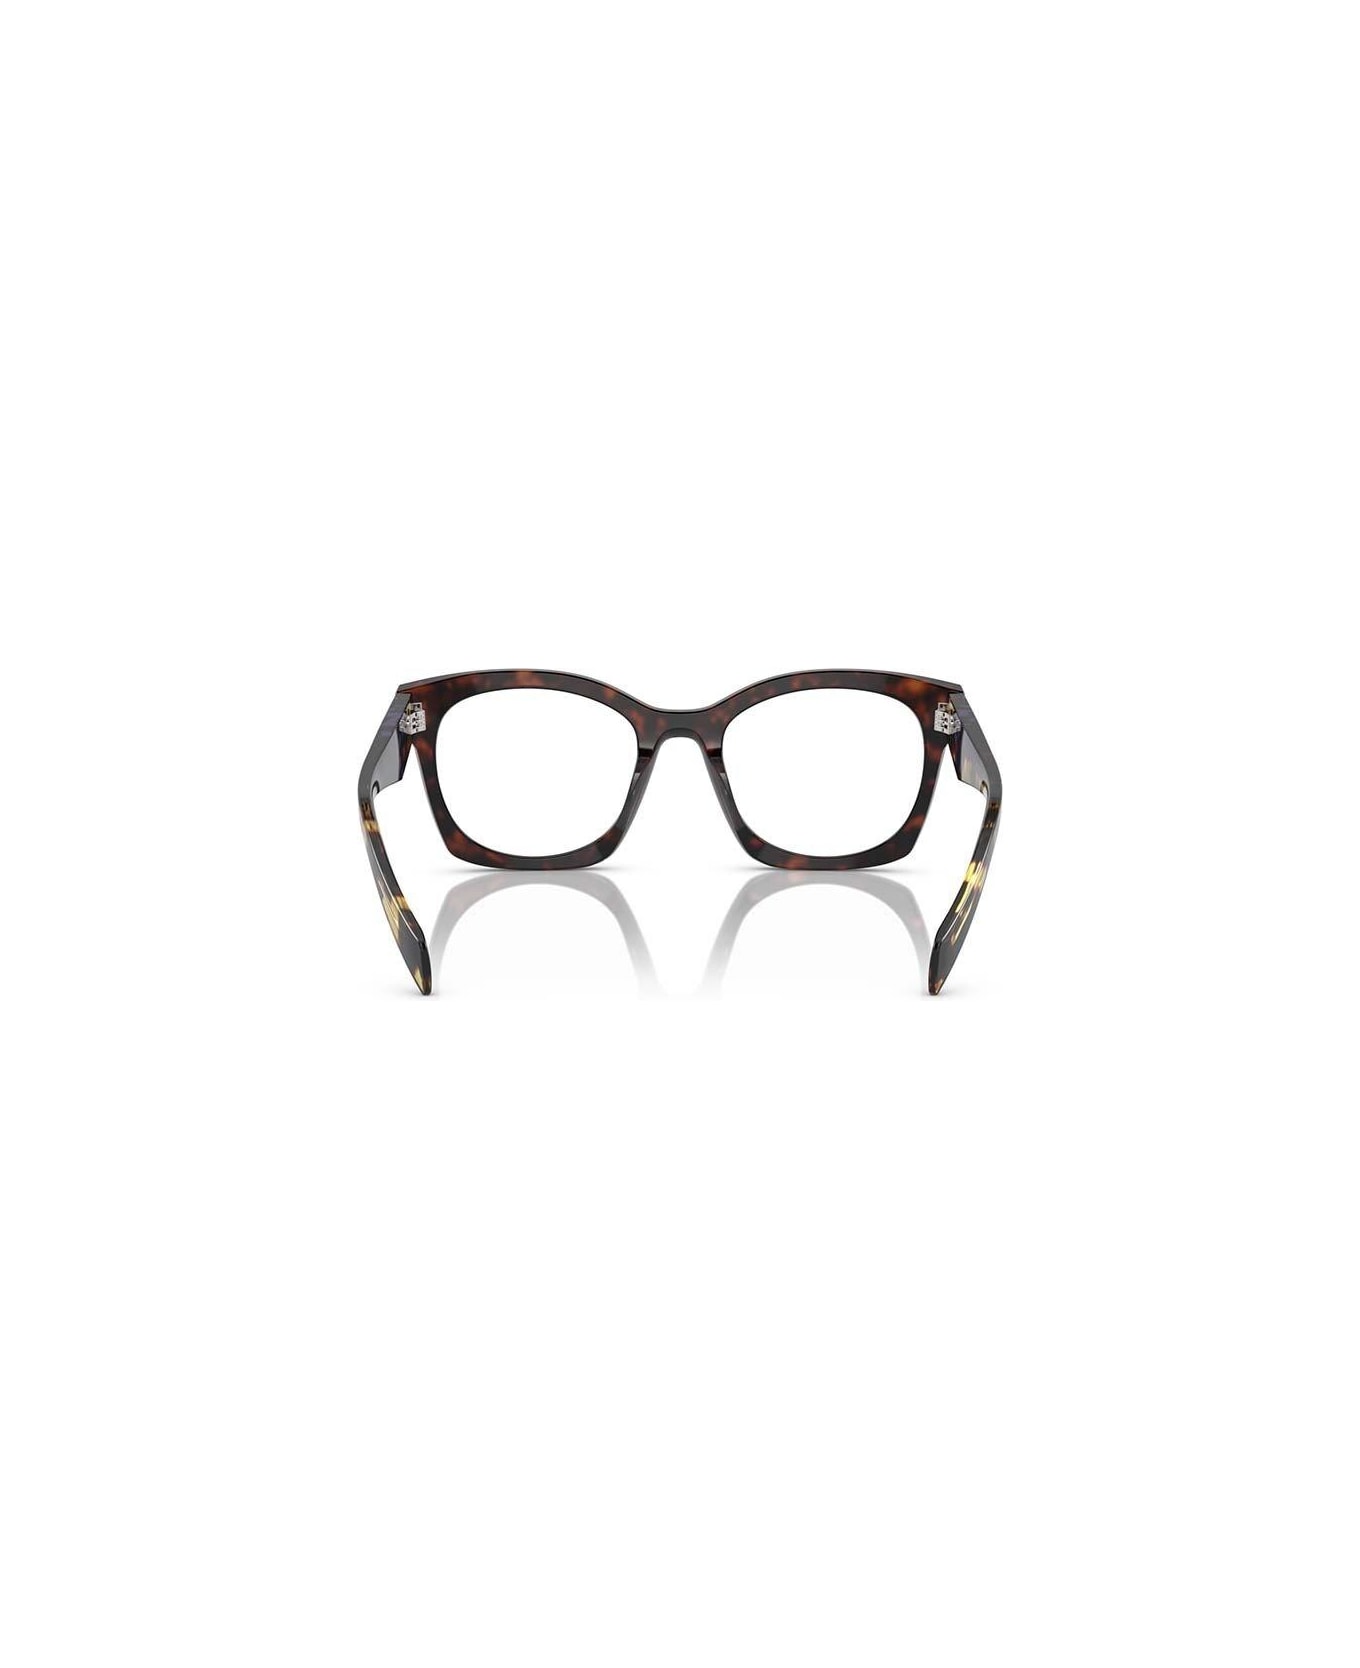 Prada Eyewear D-frame Glasses - 17N1O1 アイウェア